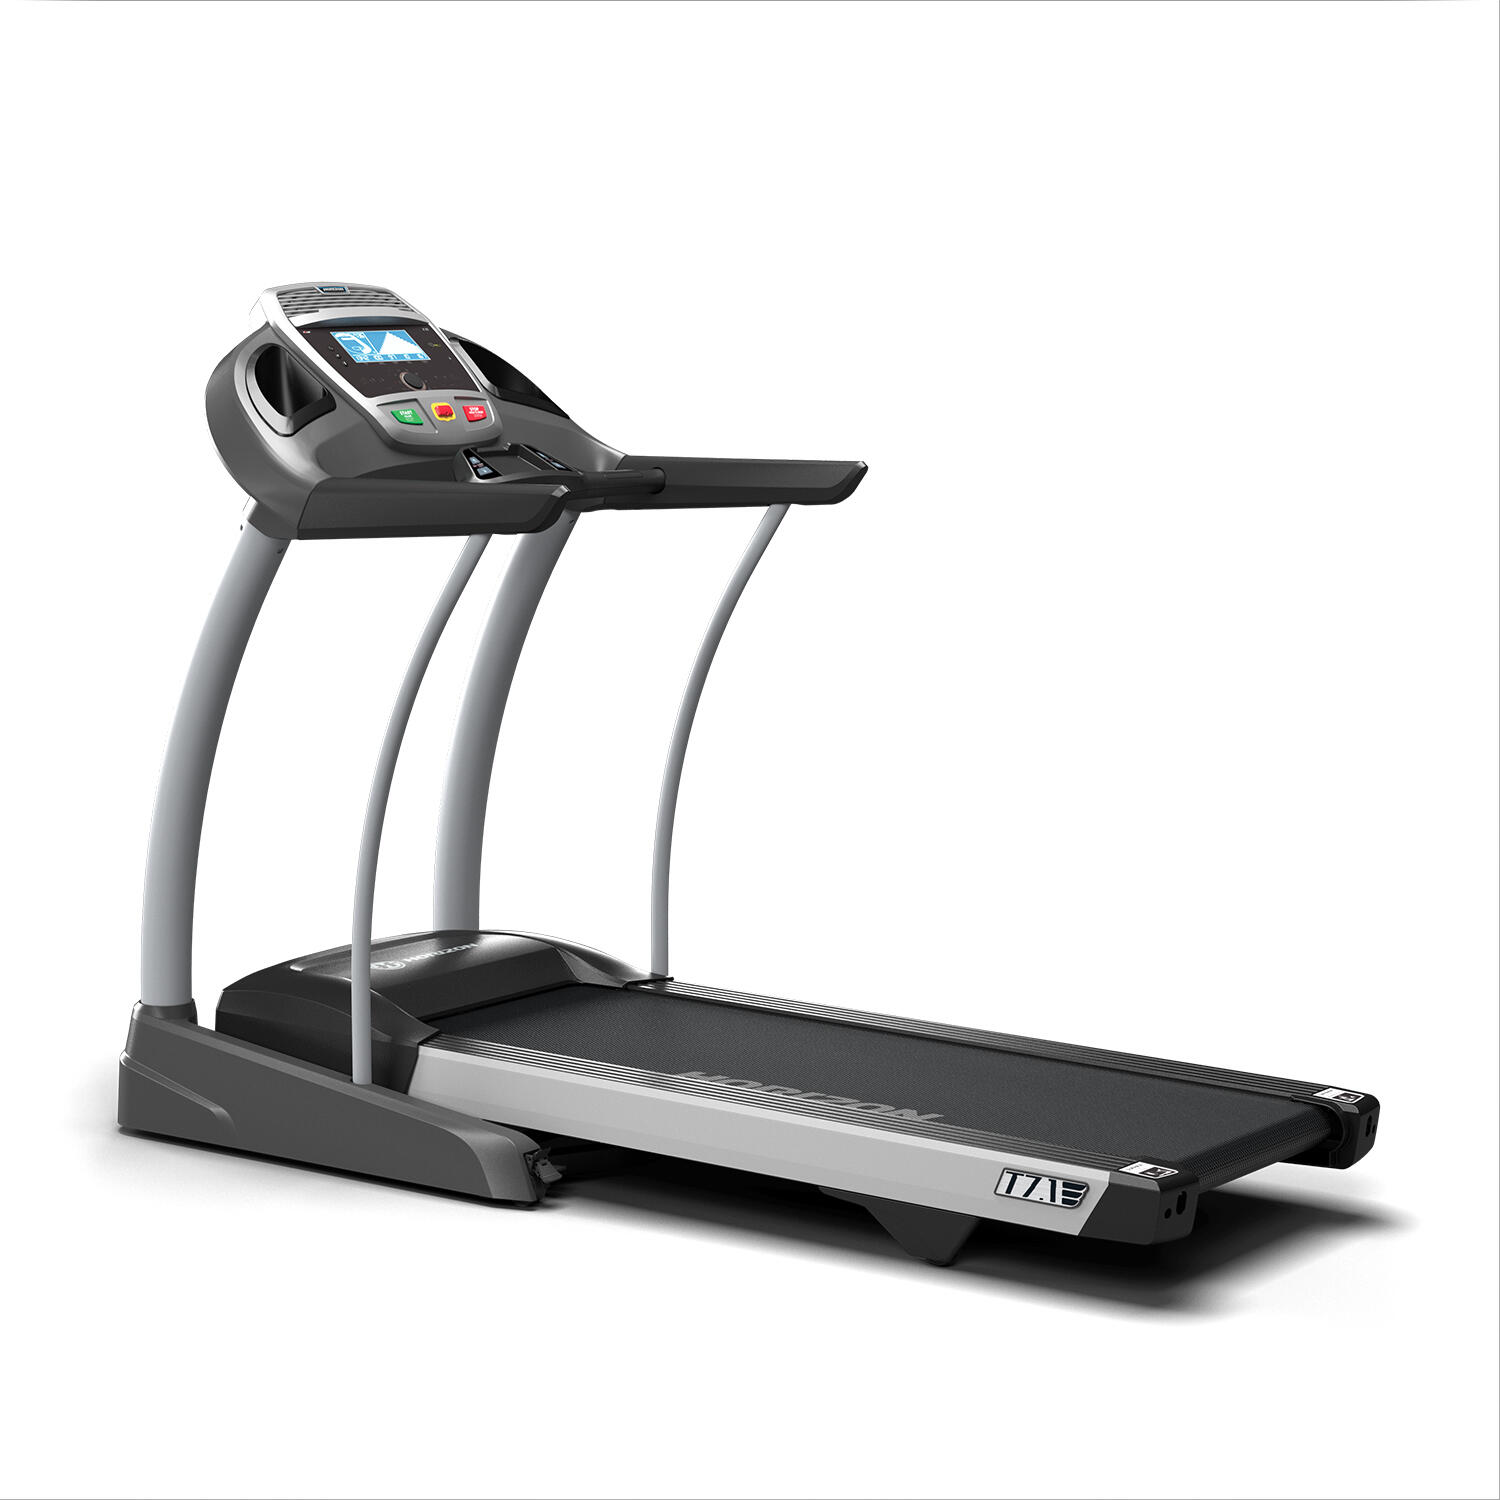 Horizon T 7.1 Elite Treadmill with Free Installation, L210 x W94.5 x H150cm 1/7